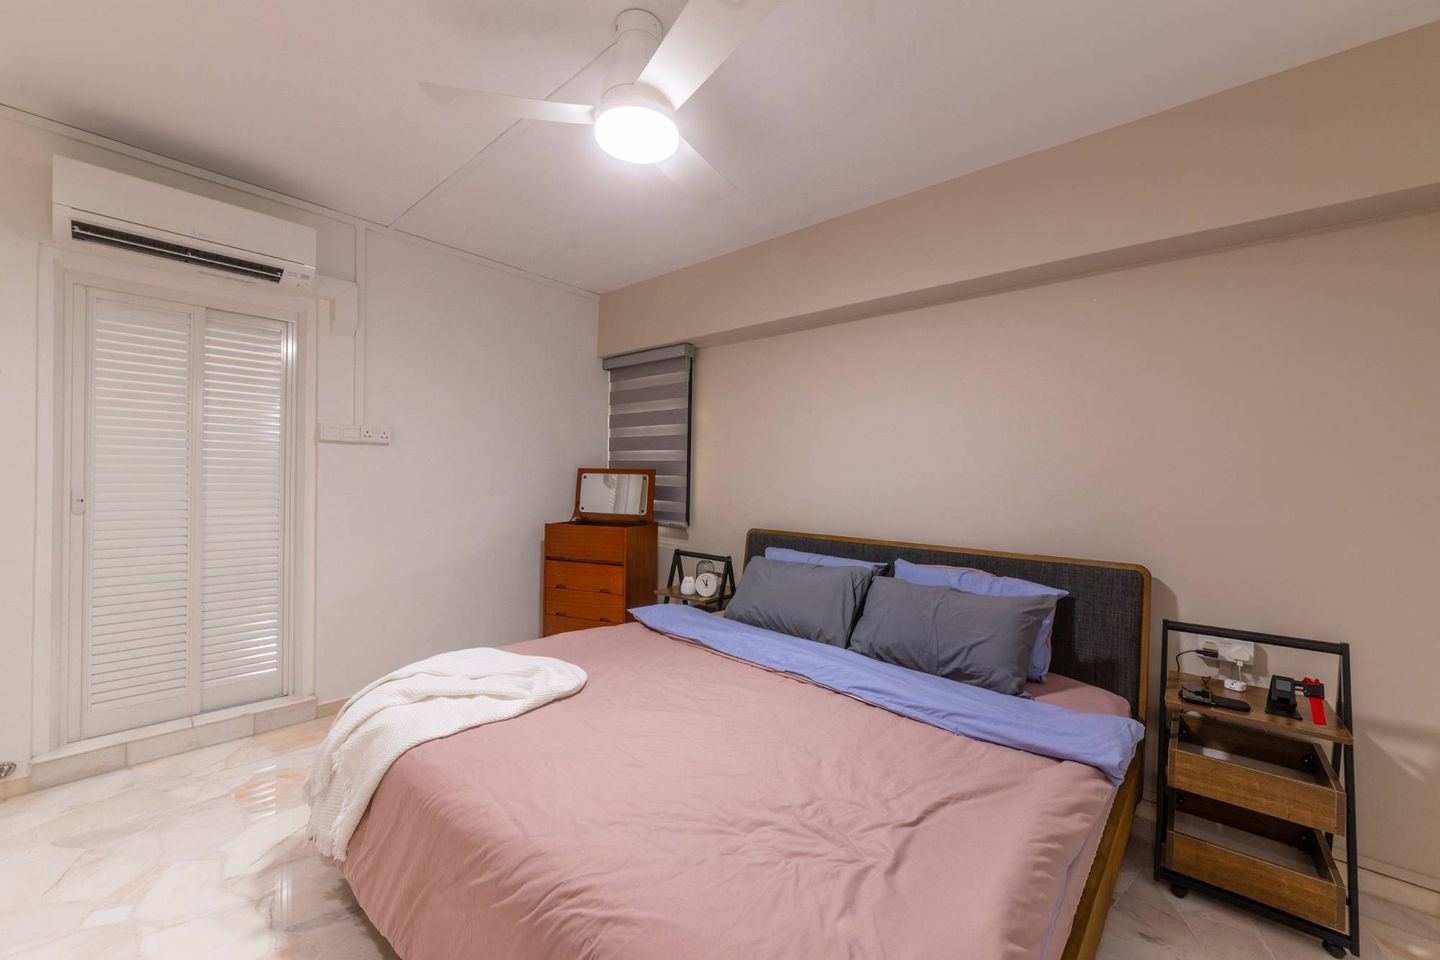 Minimal Bedroom Design With Overhead Lighting